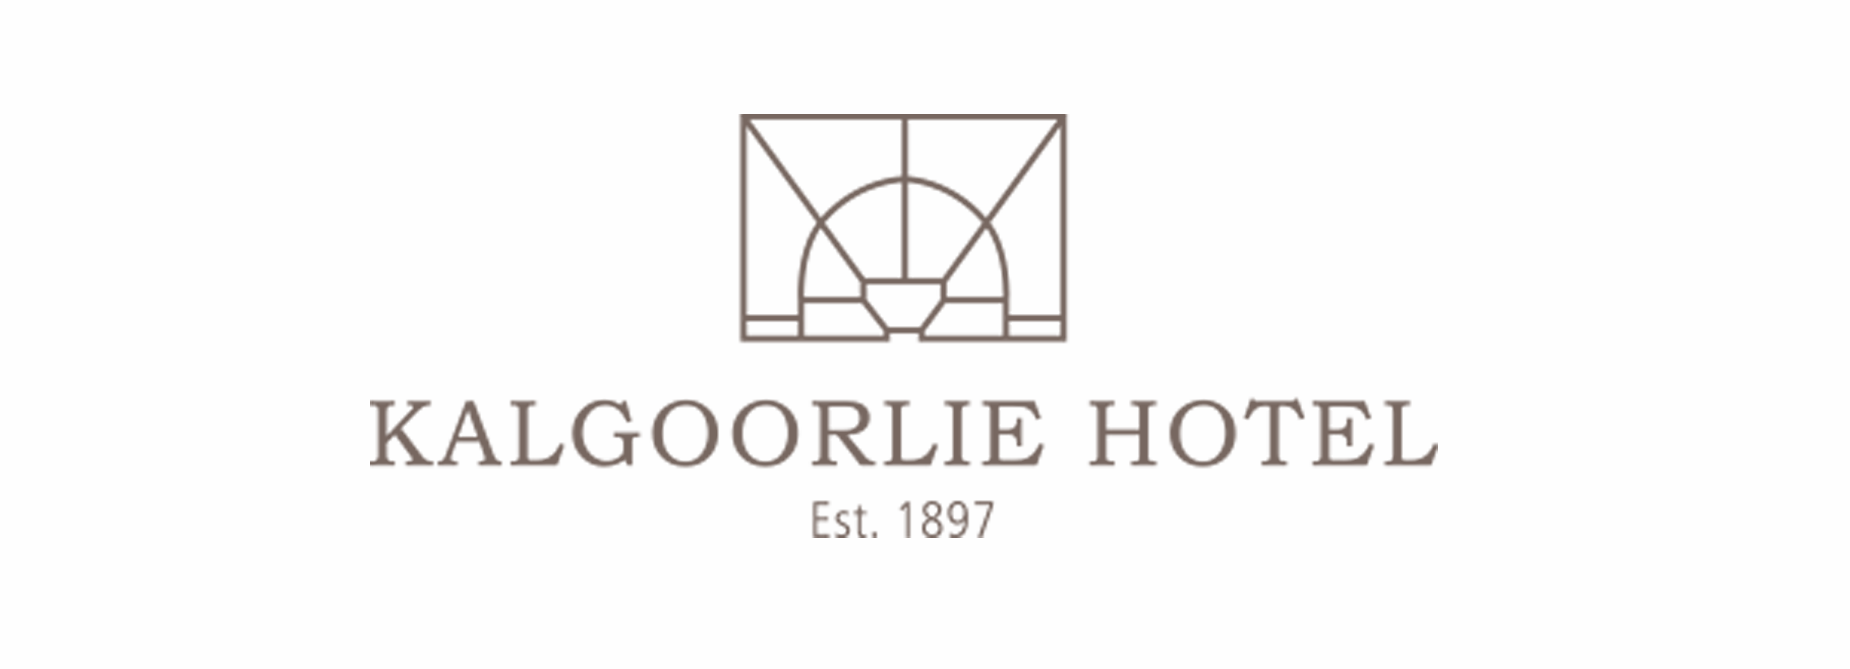 The Kalgoorlie Hotel Logo